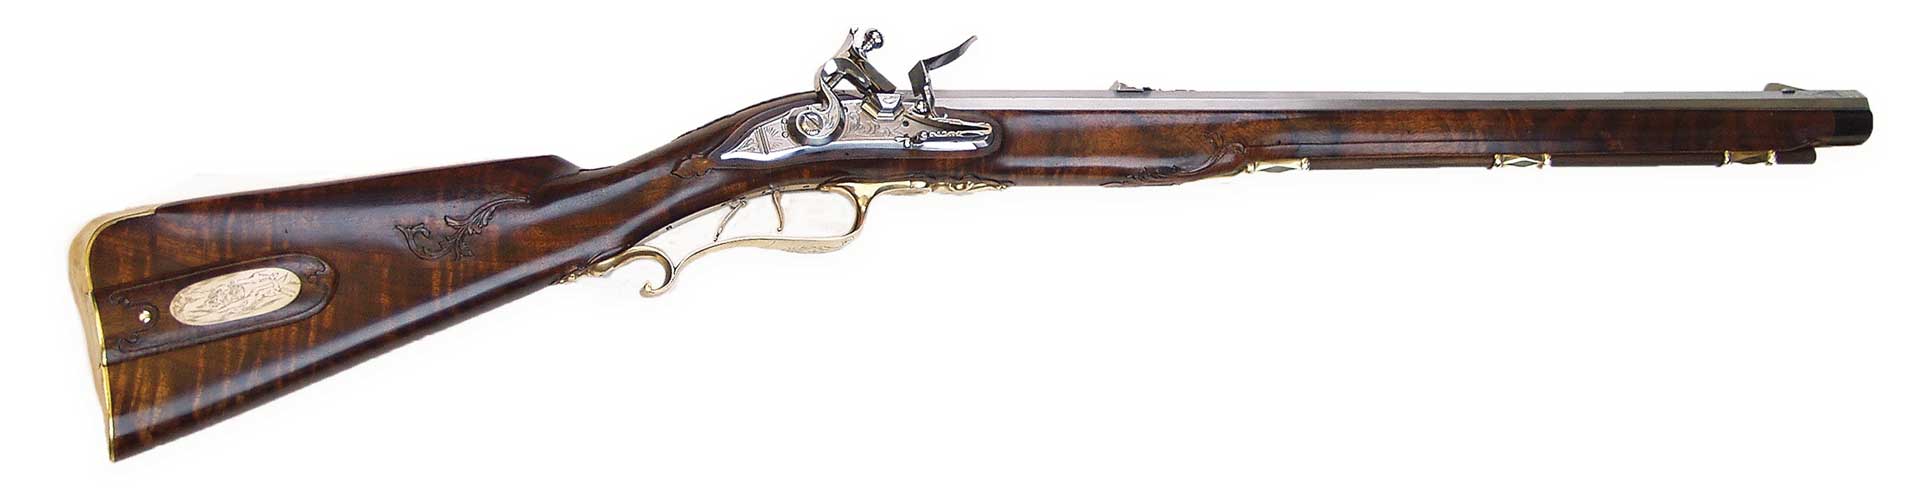 right side jaeger rifle musket gun carbine muzzleloader artwork gunsmith craftsmanship